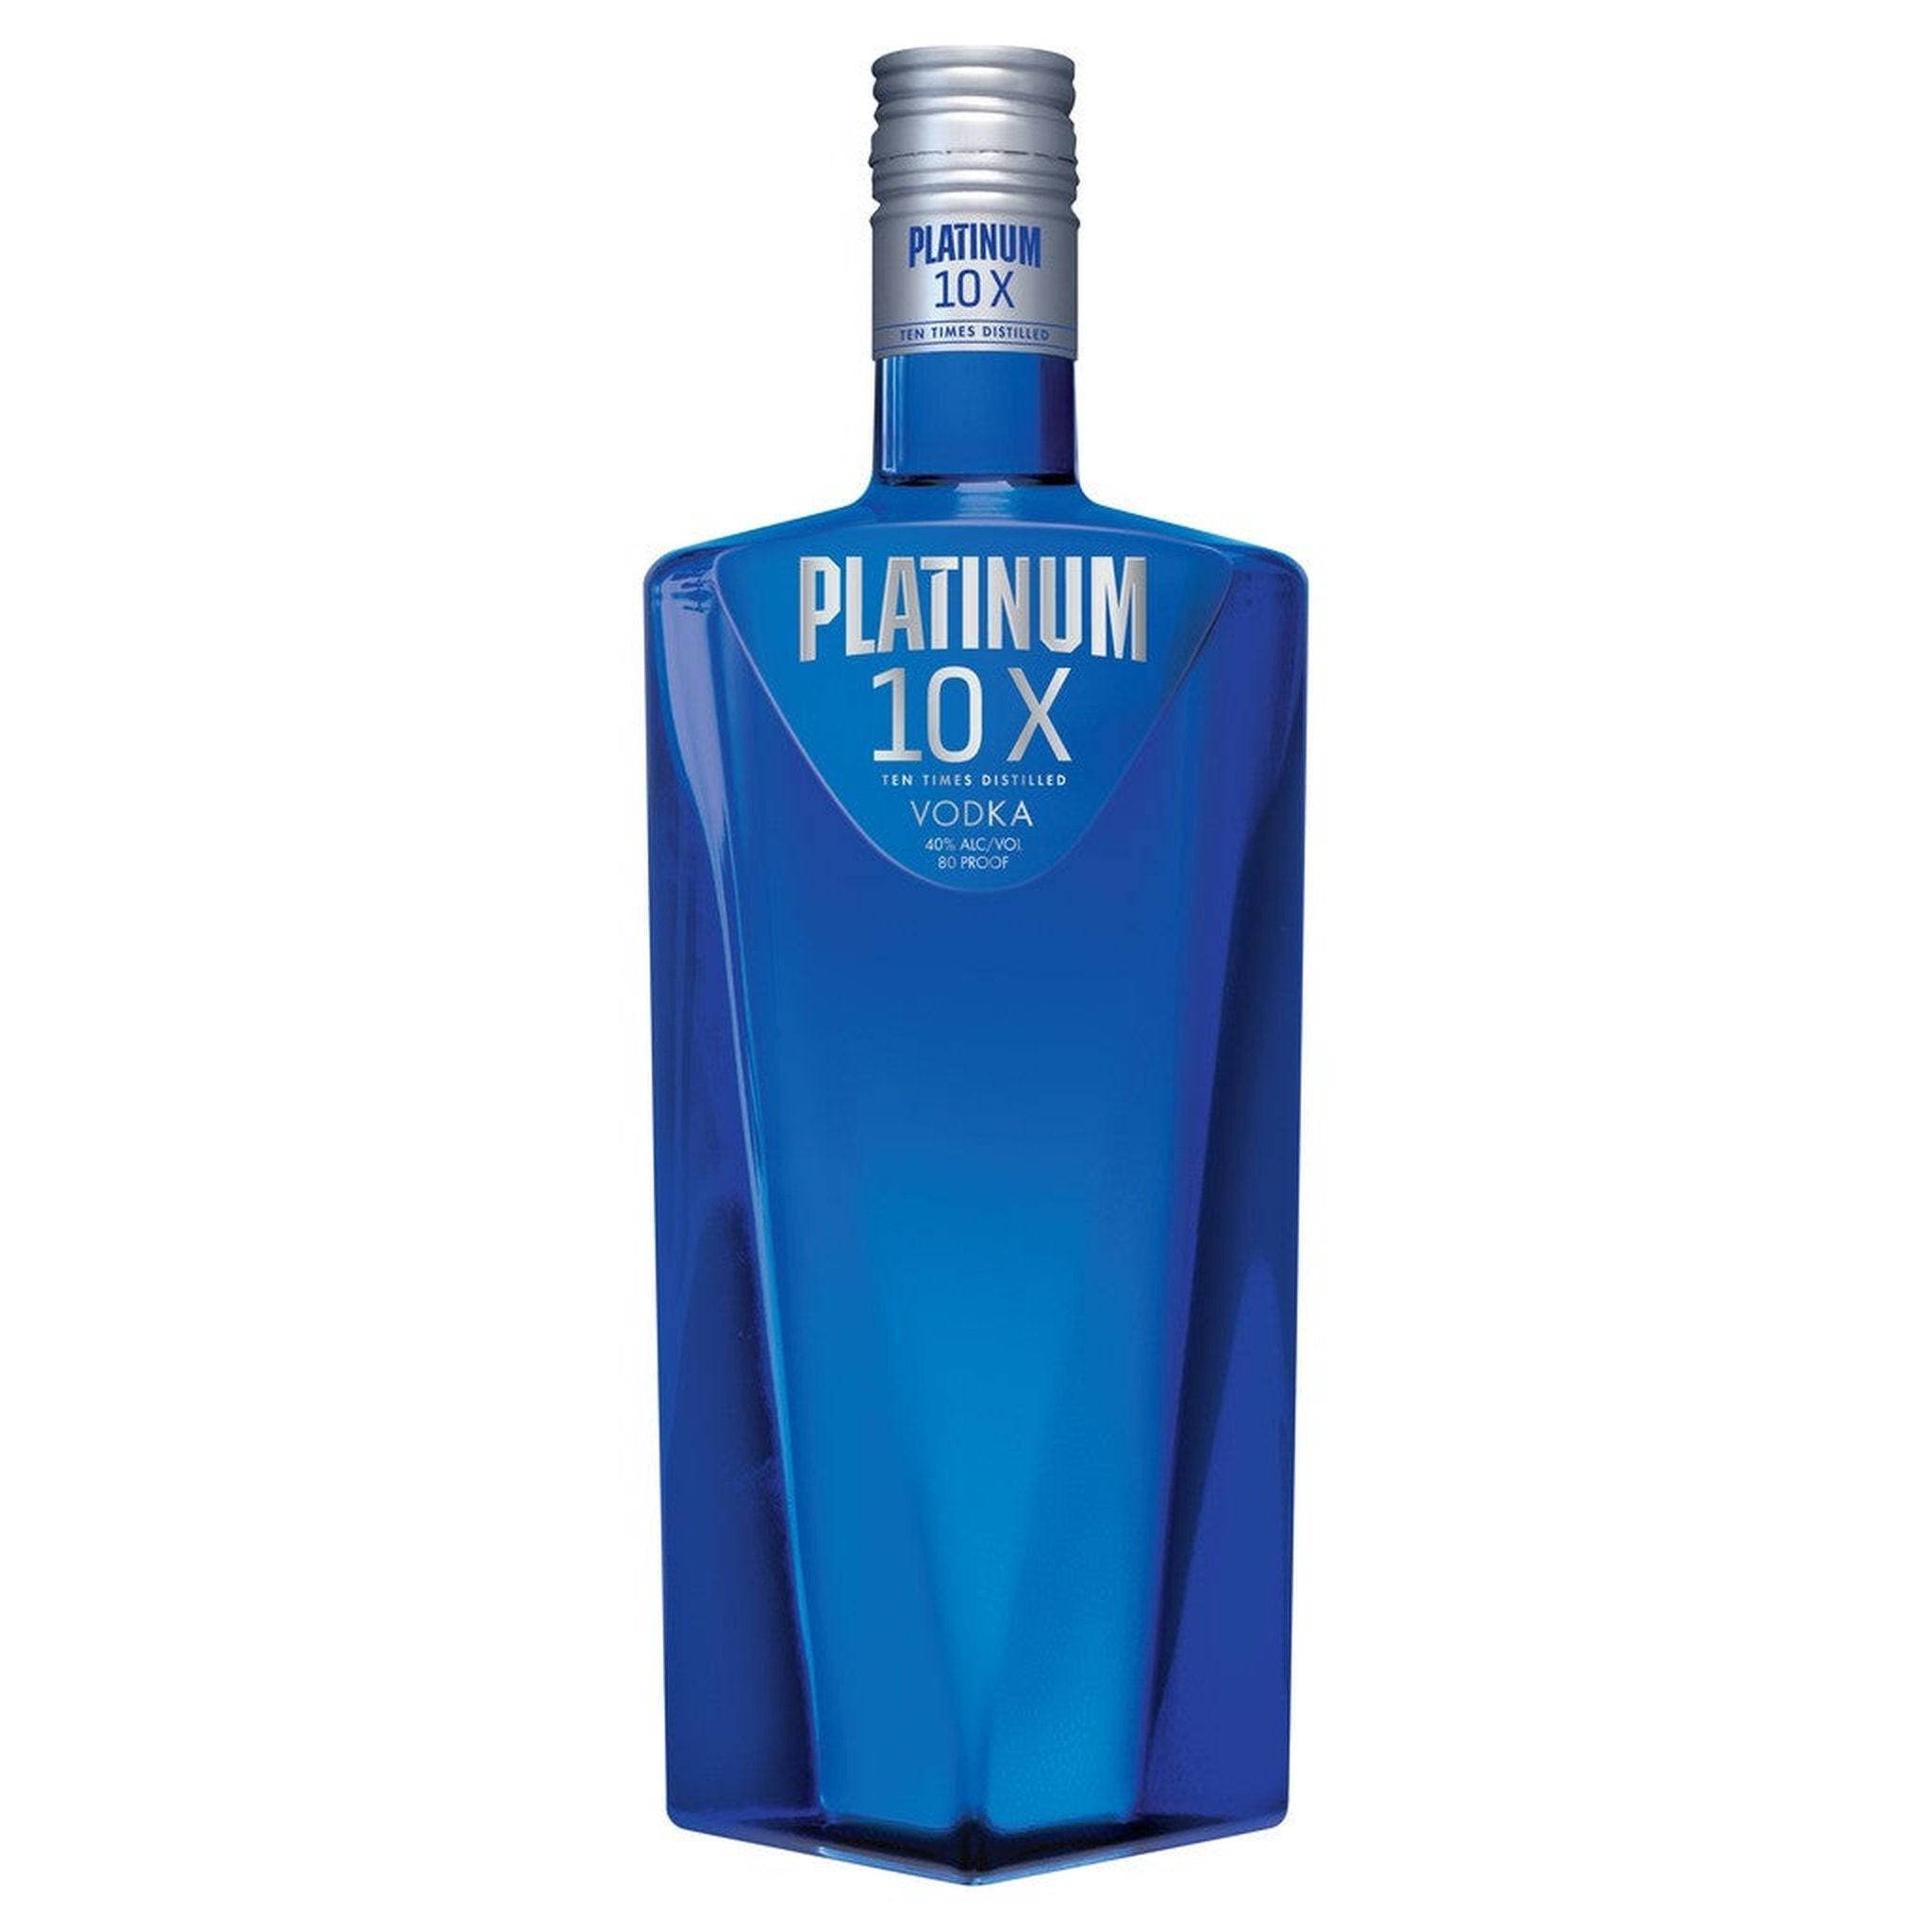 Platinum 10x Vodka 750 ml